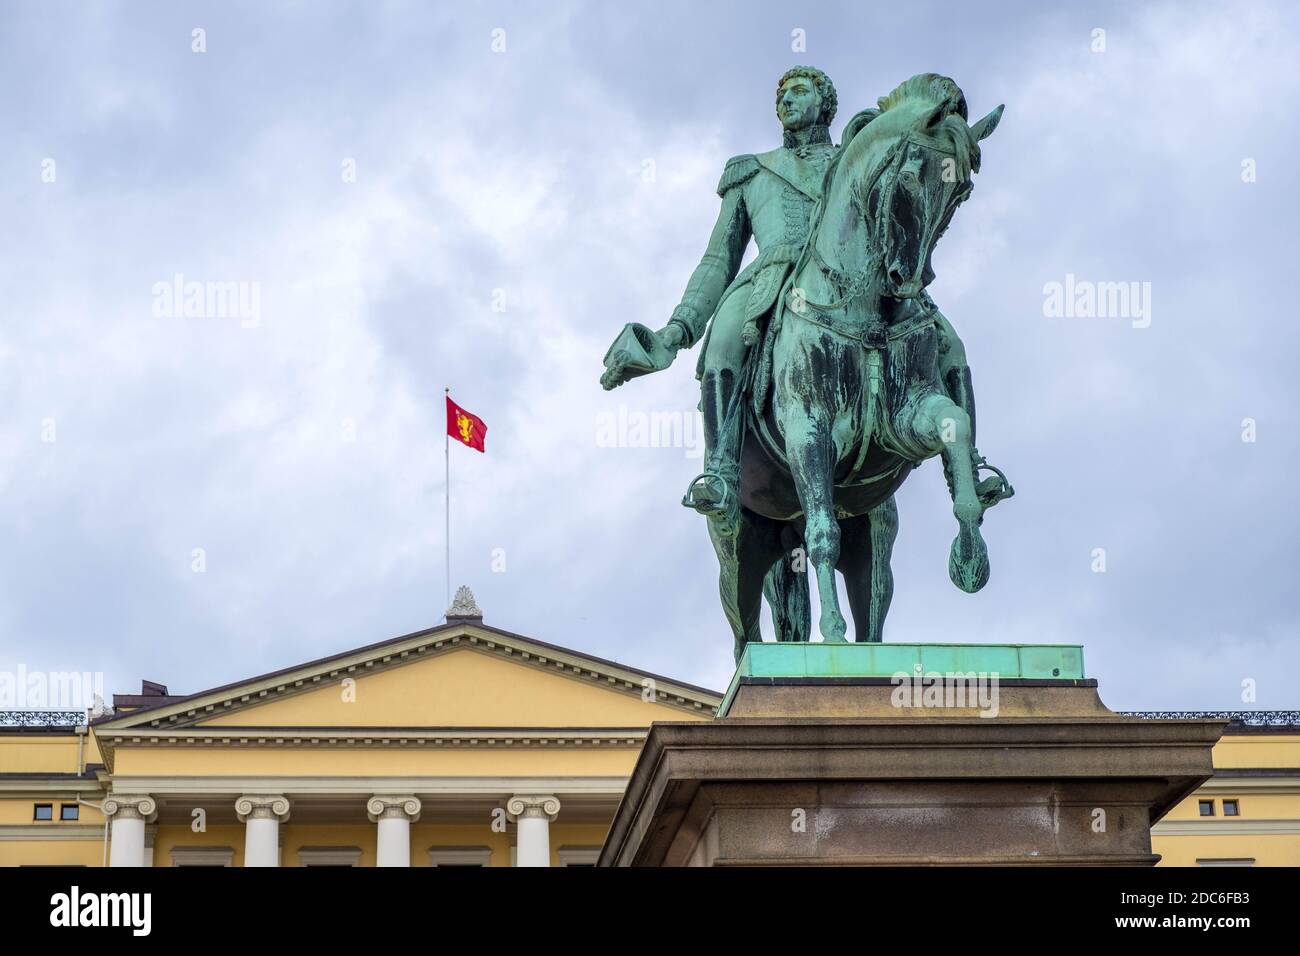 Oslo, Ostlandet / Norvège - 2019/08/30: Statue du roi Charles XIV John - Karl XIV Johan - en face du palais royal d'Oslo, Slottet, à Slottsplassen Banque D'Images